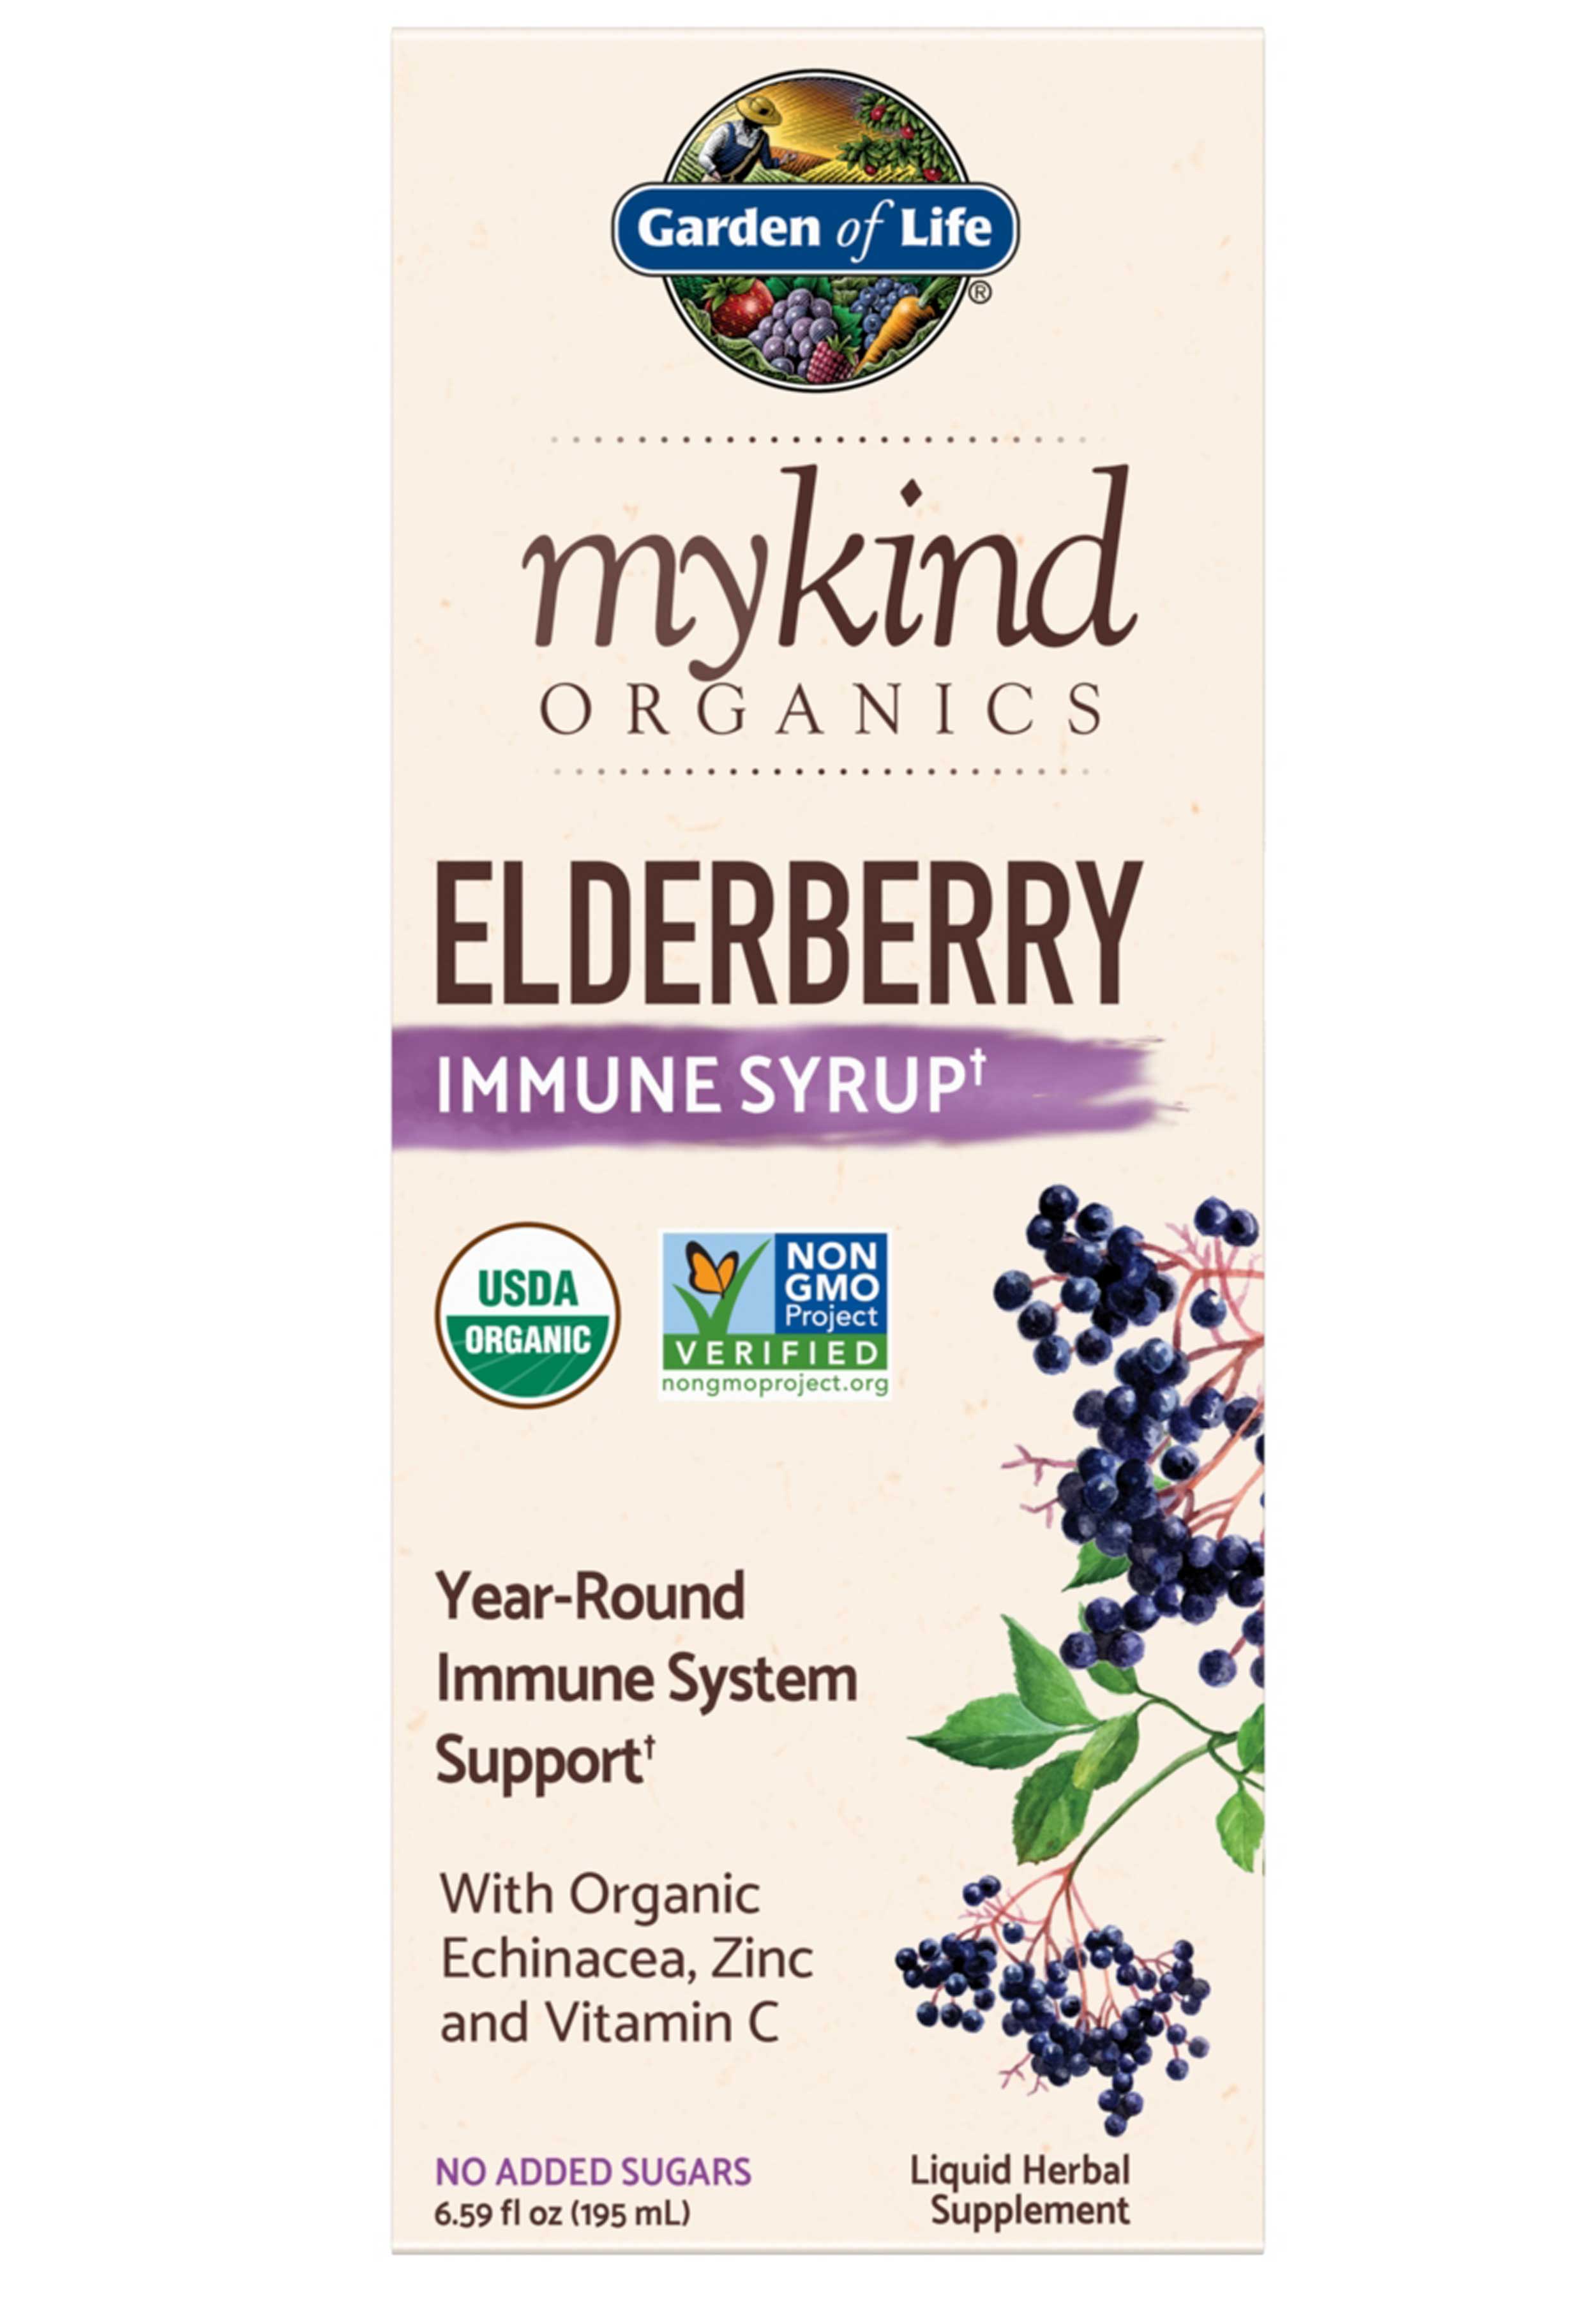 Garden of Life mykind Organics Elderberry Immune Syrup